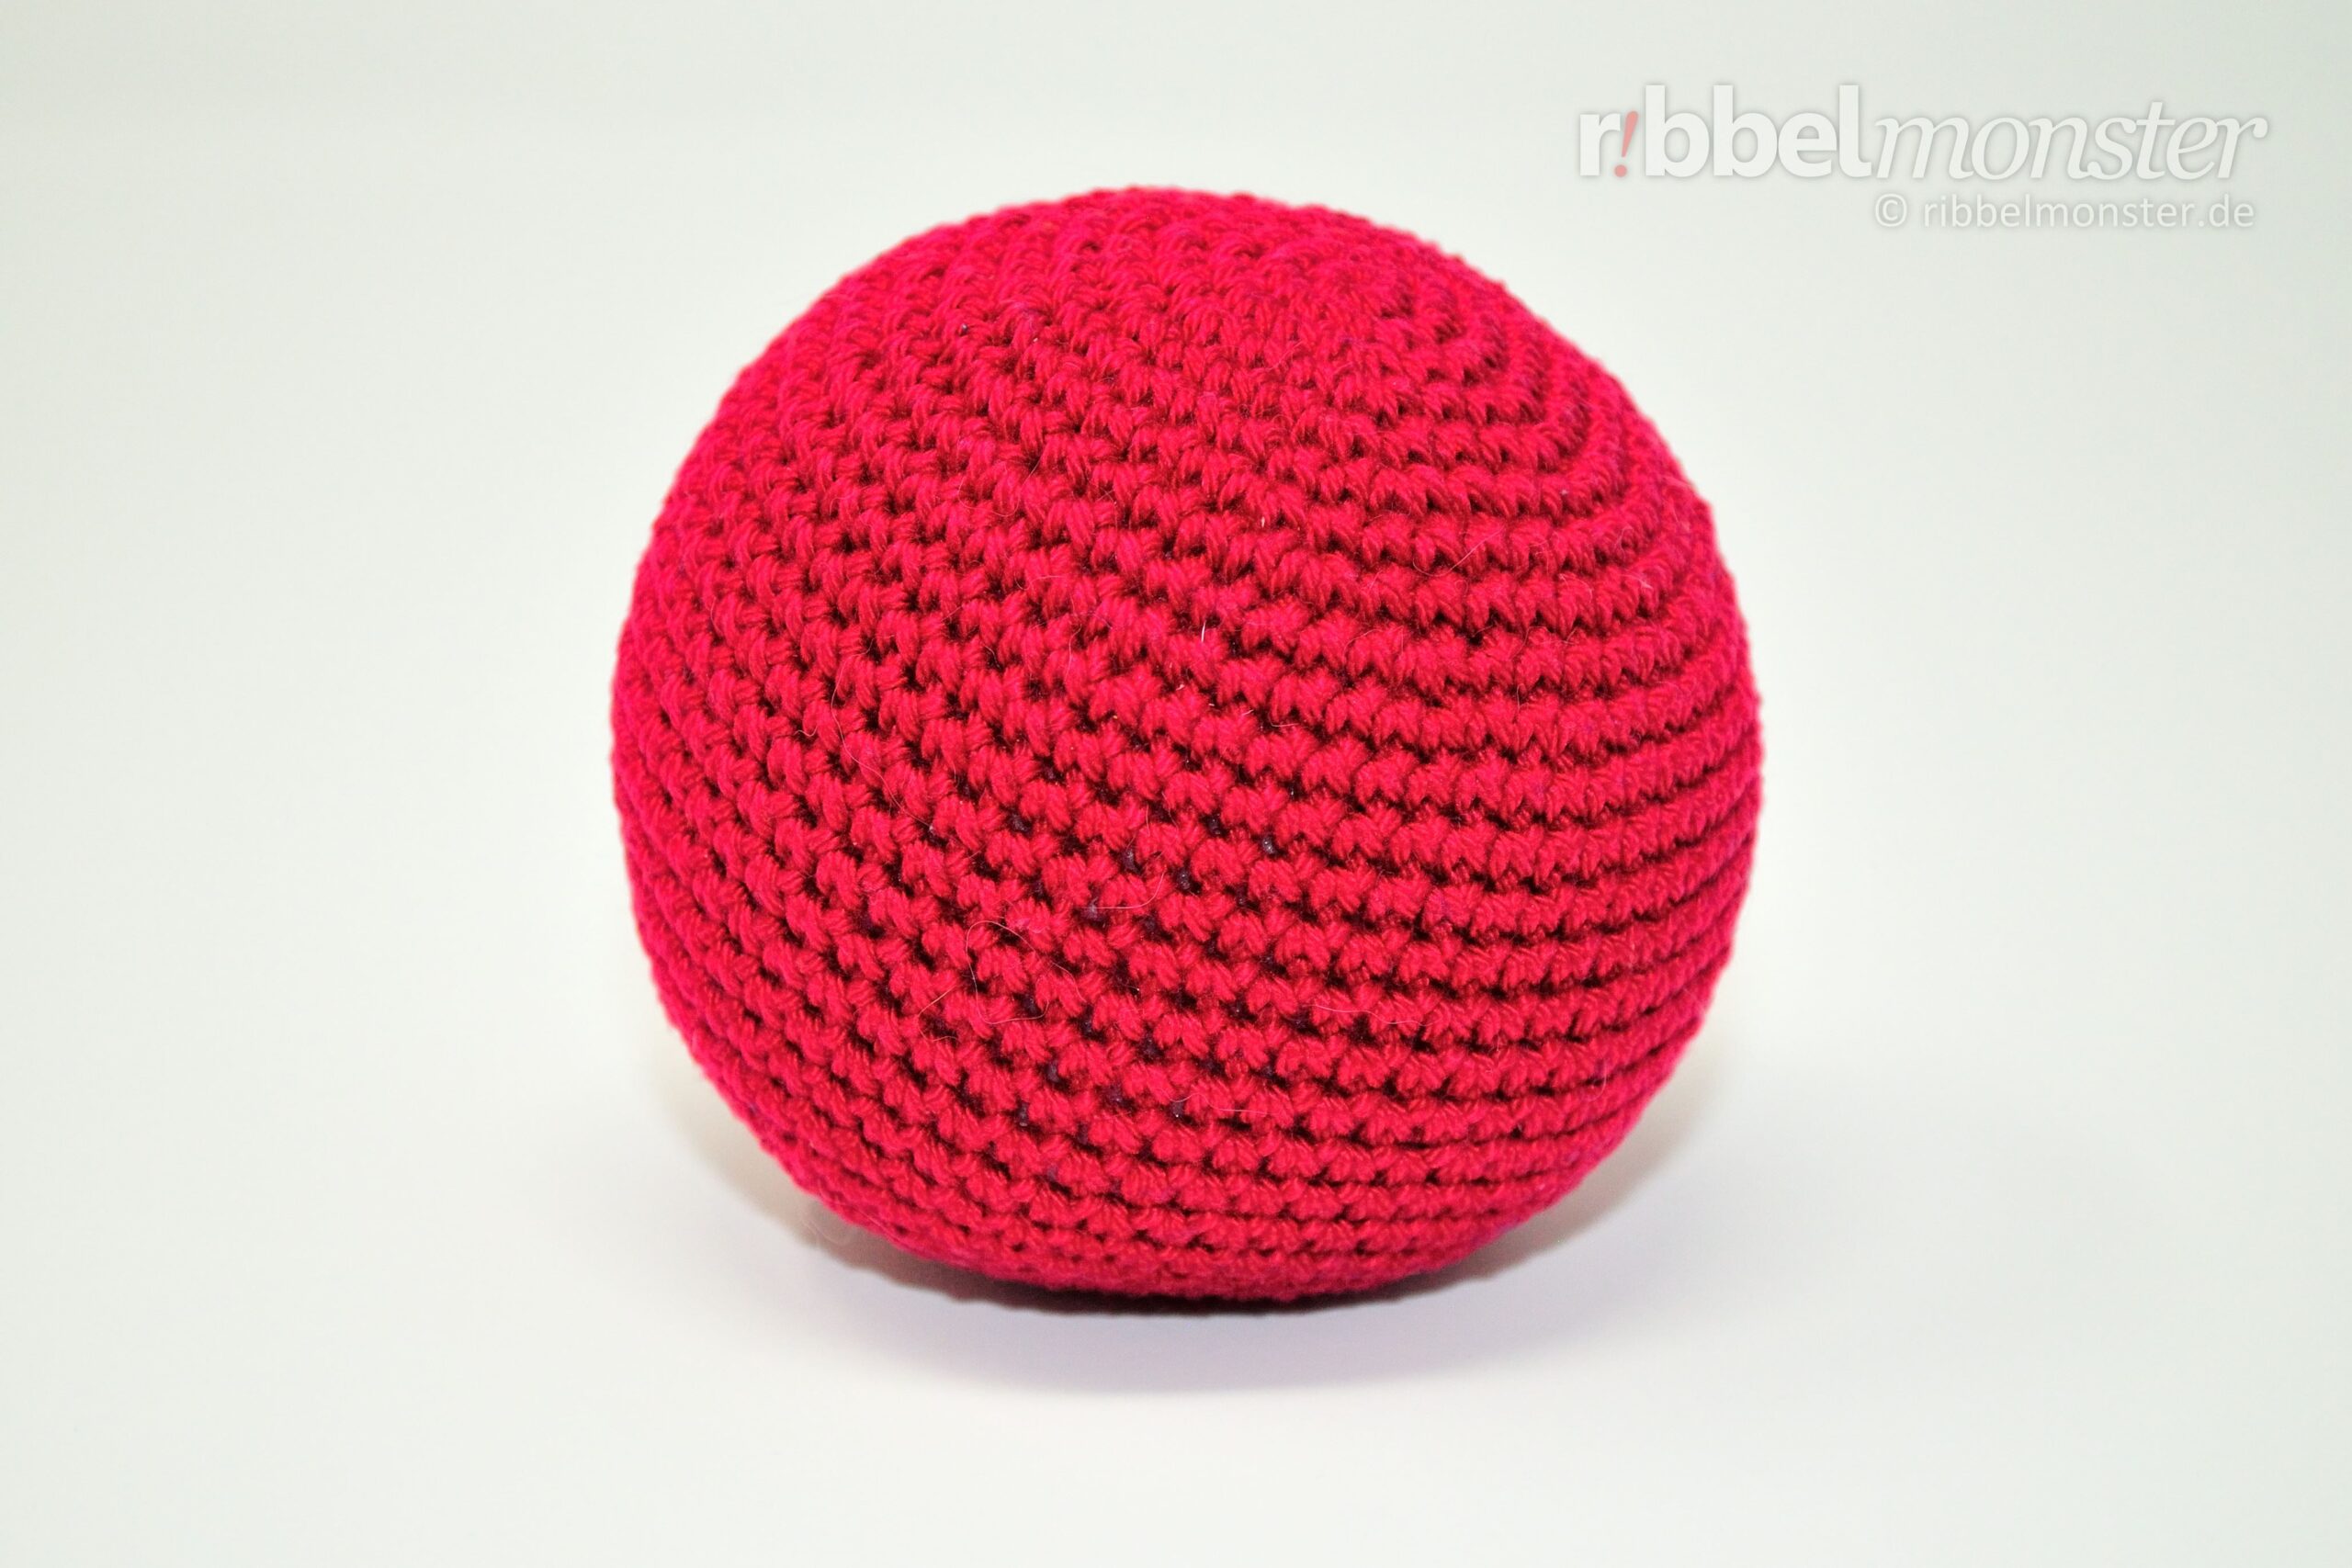 Amigurumi – Crochet Simple Biggest Ball